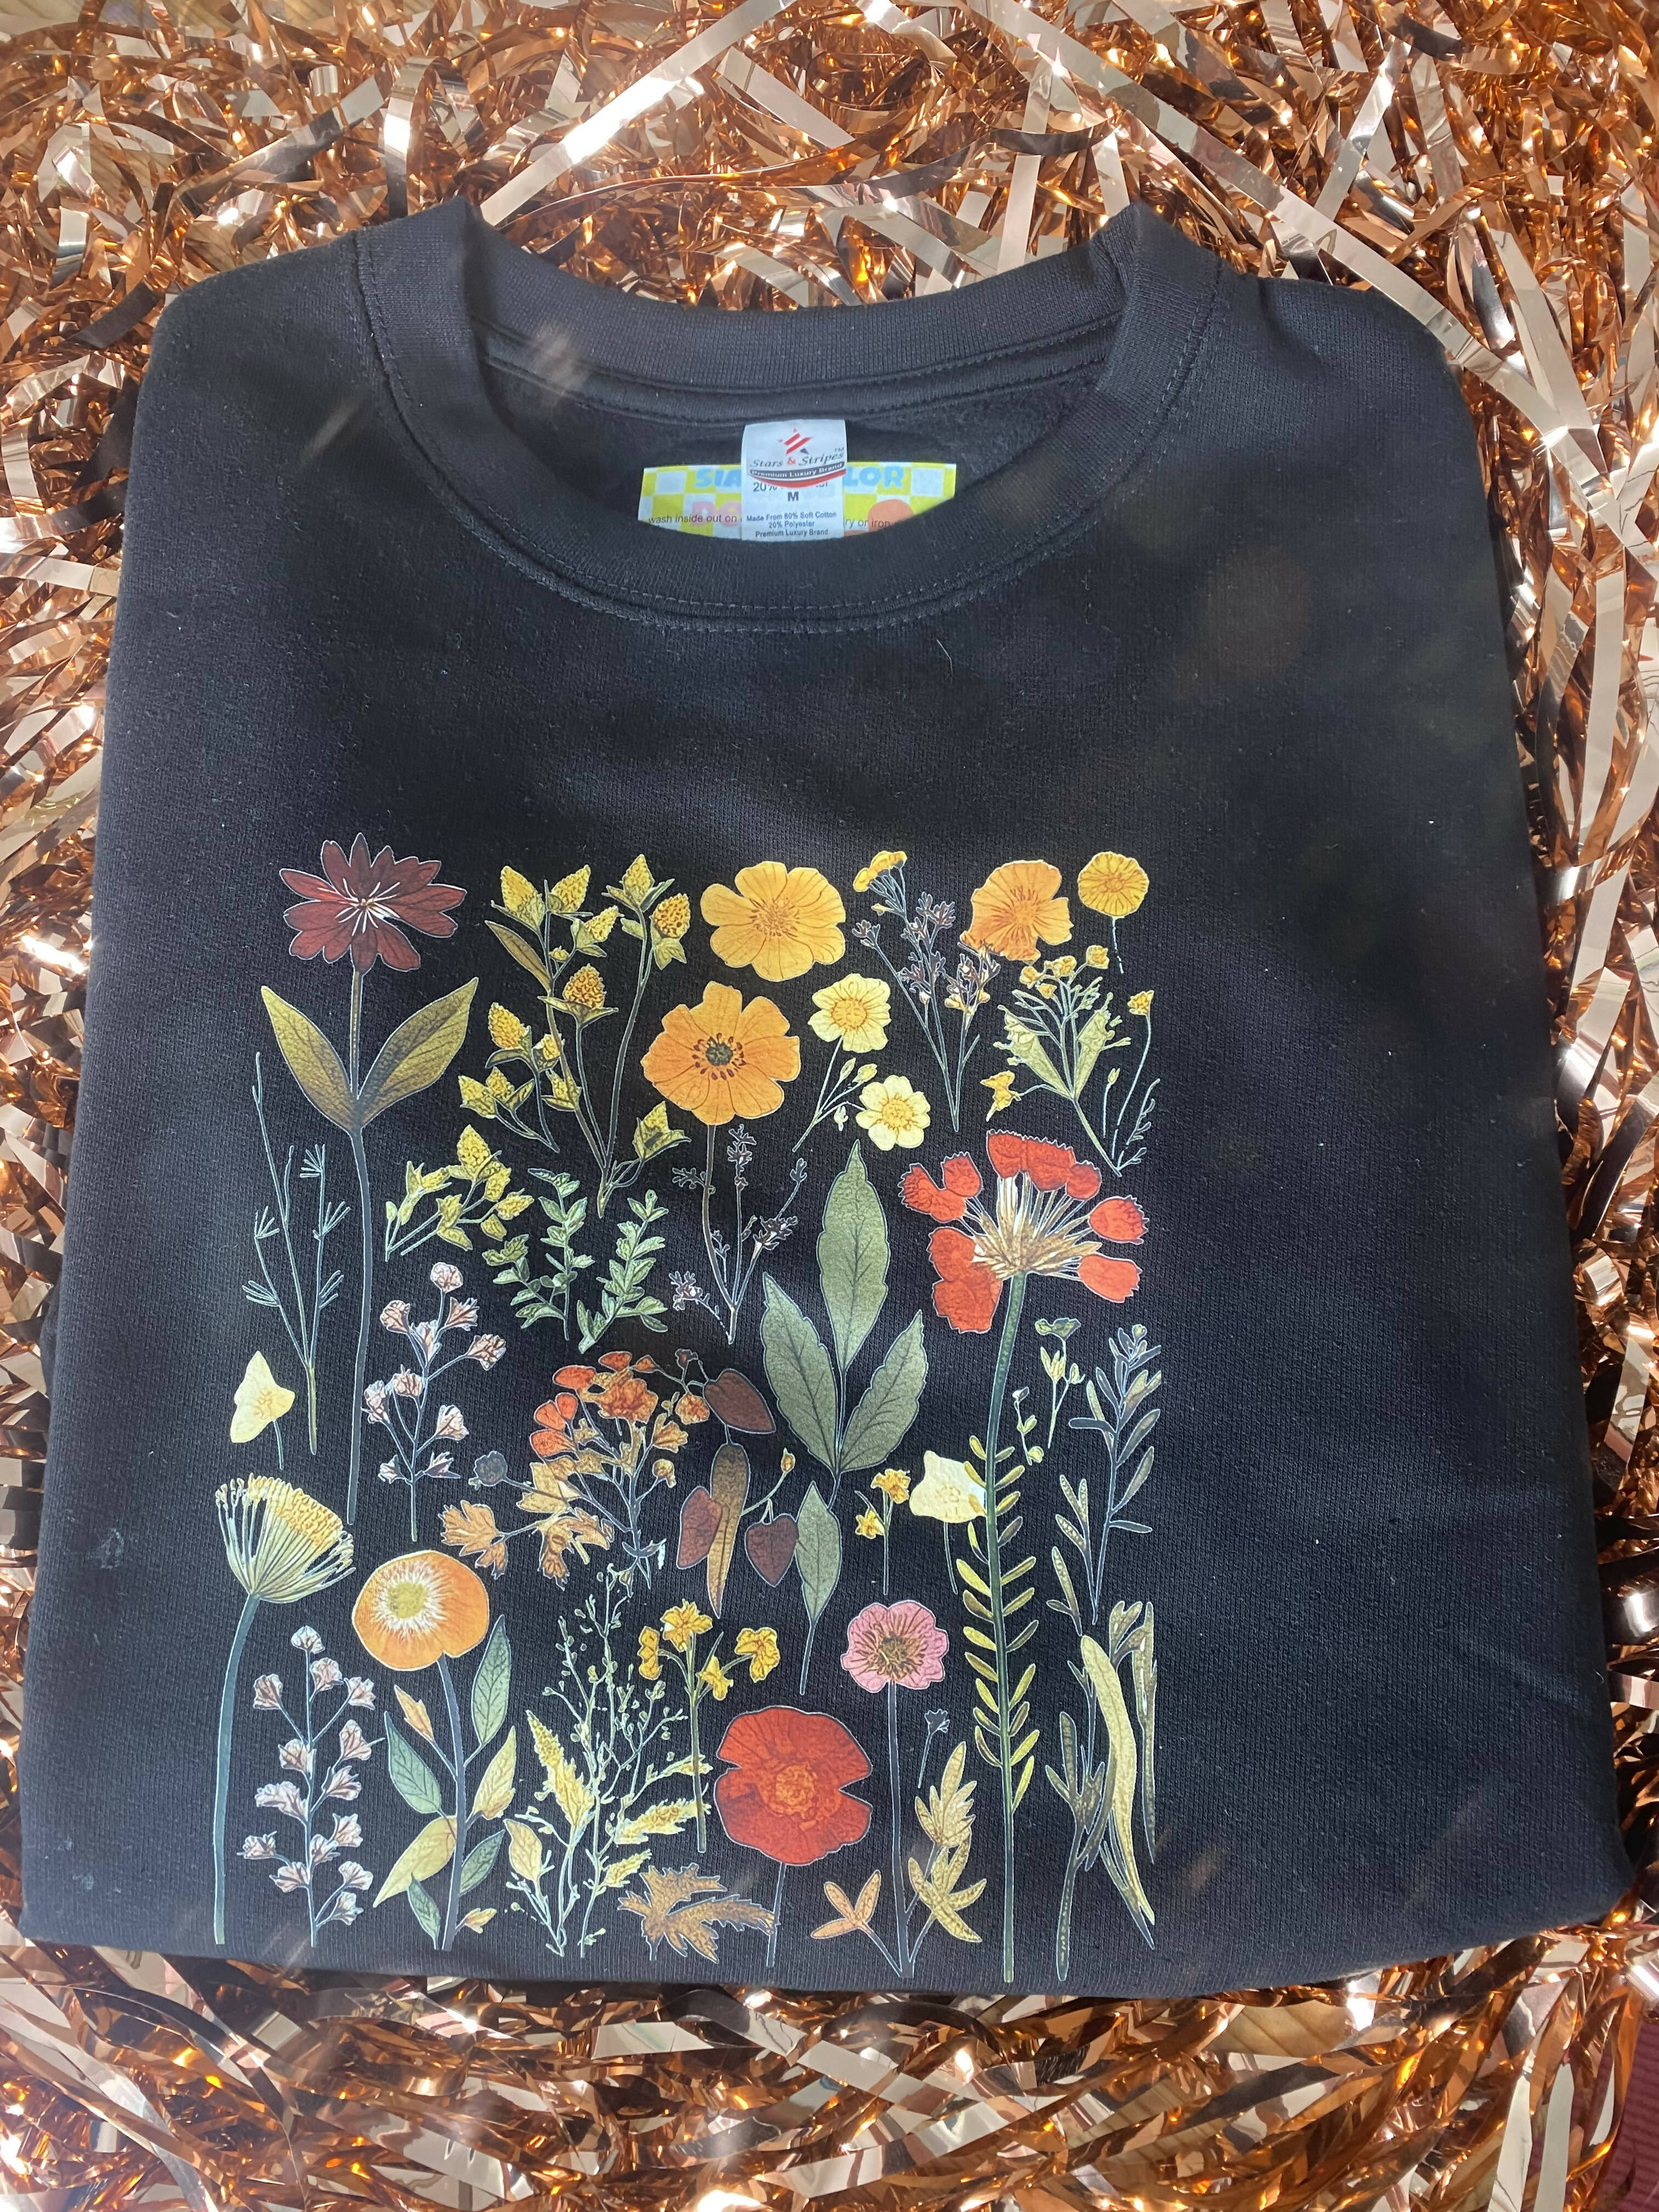 Pressed flower sweatshirt, SMALL